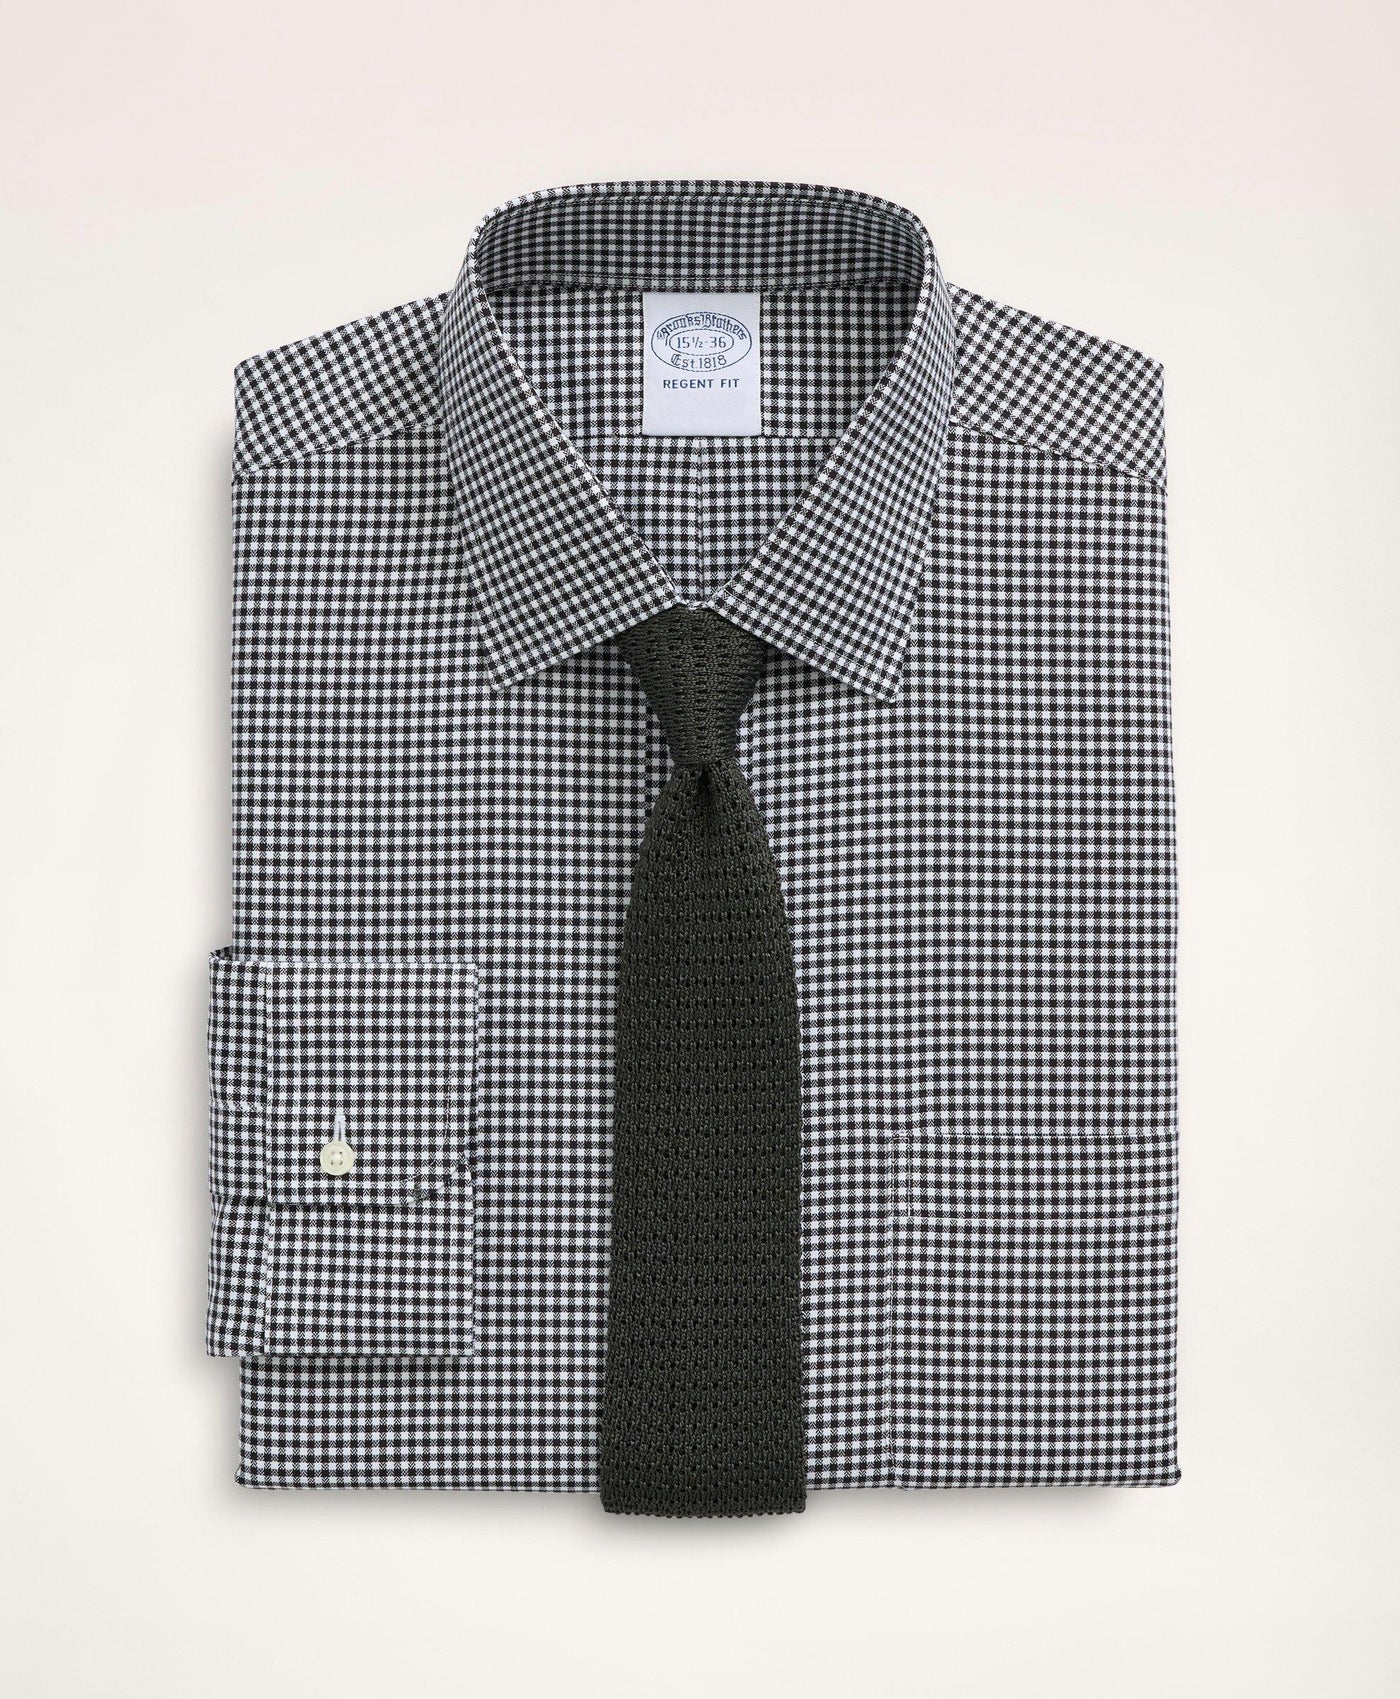 Stretch Regent Regular-Fit Dress Shirt, Non-Iron Herringbone Gingham Ainsley Collar - Brooks Brothers Canada